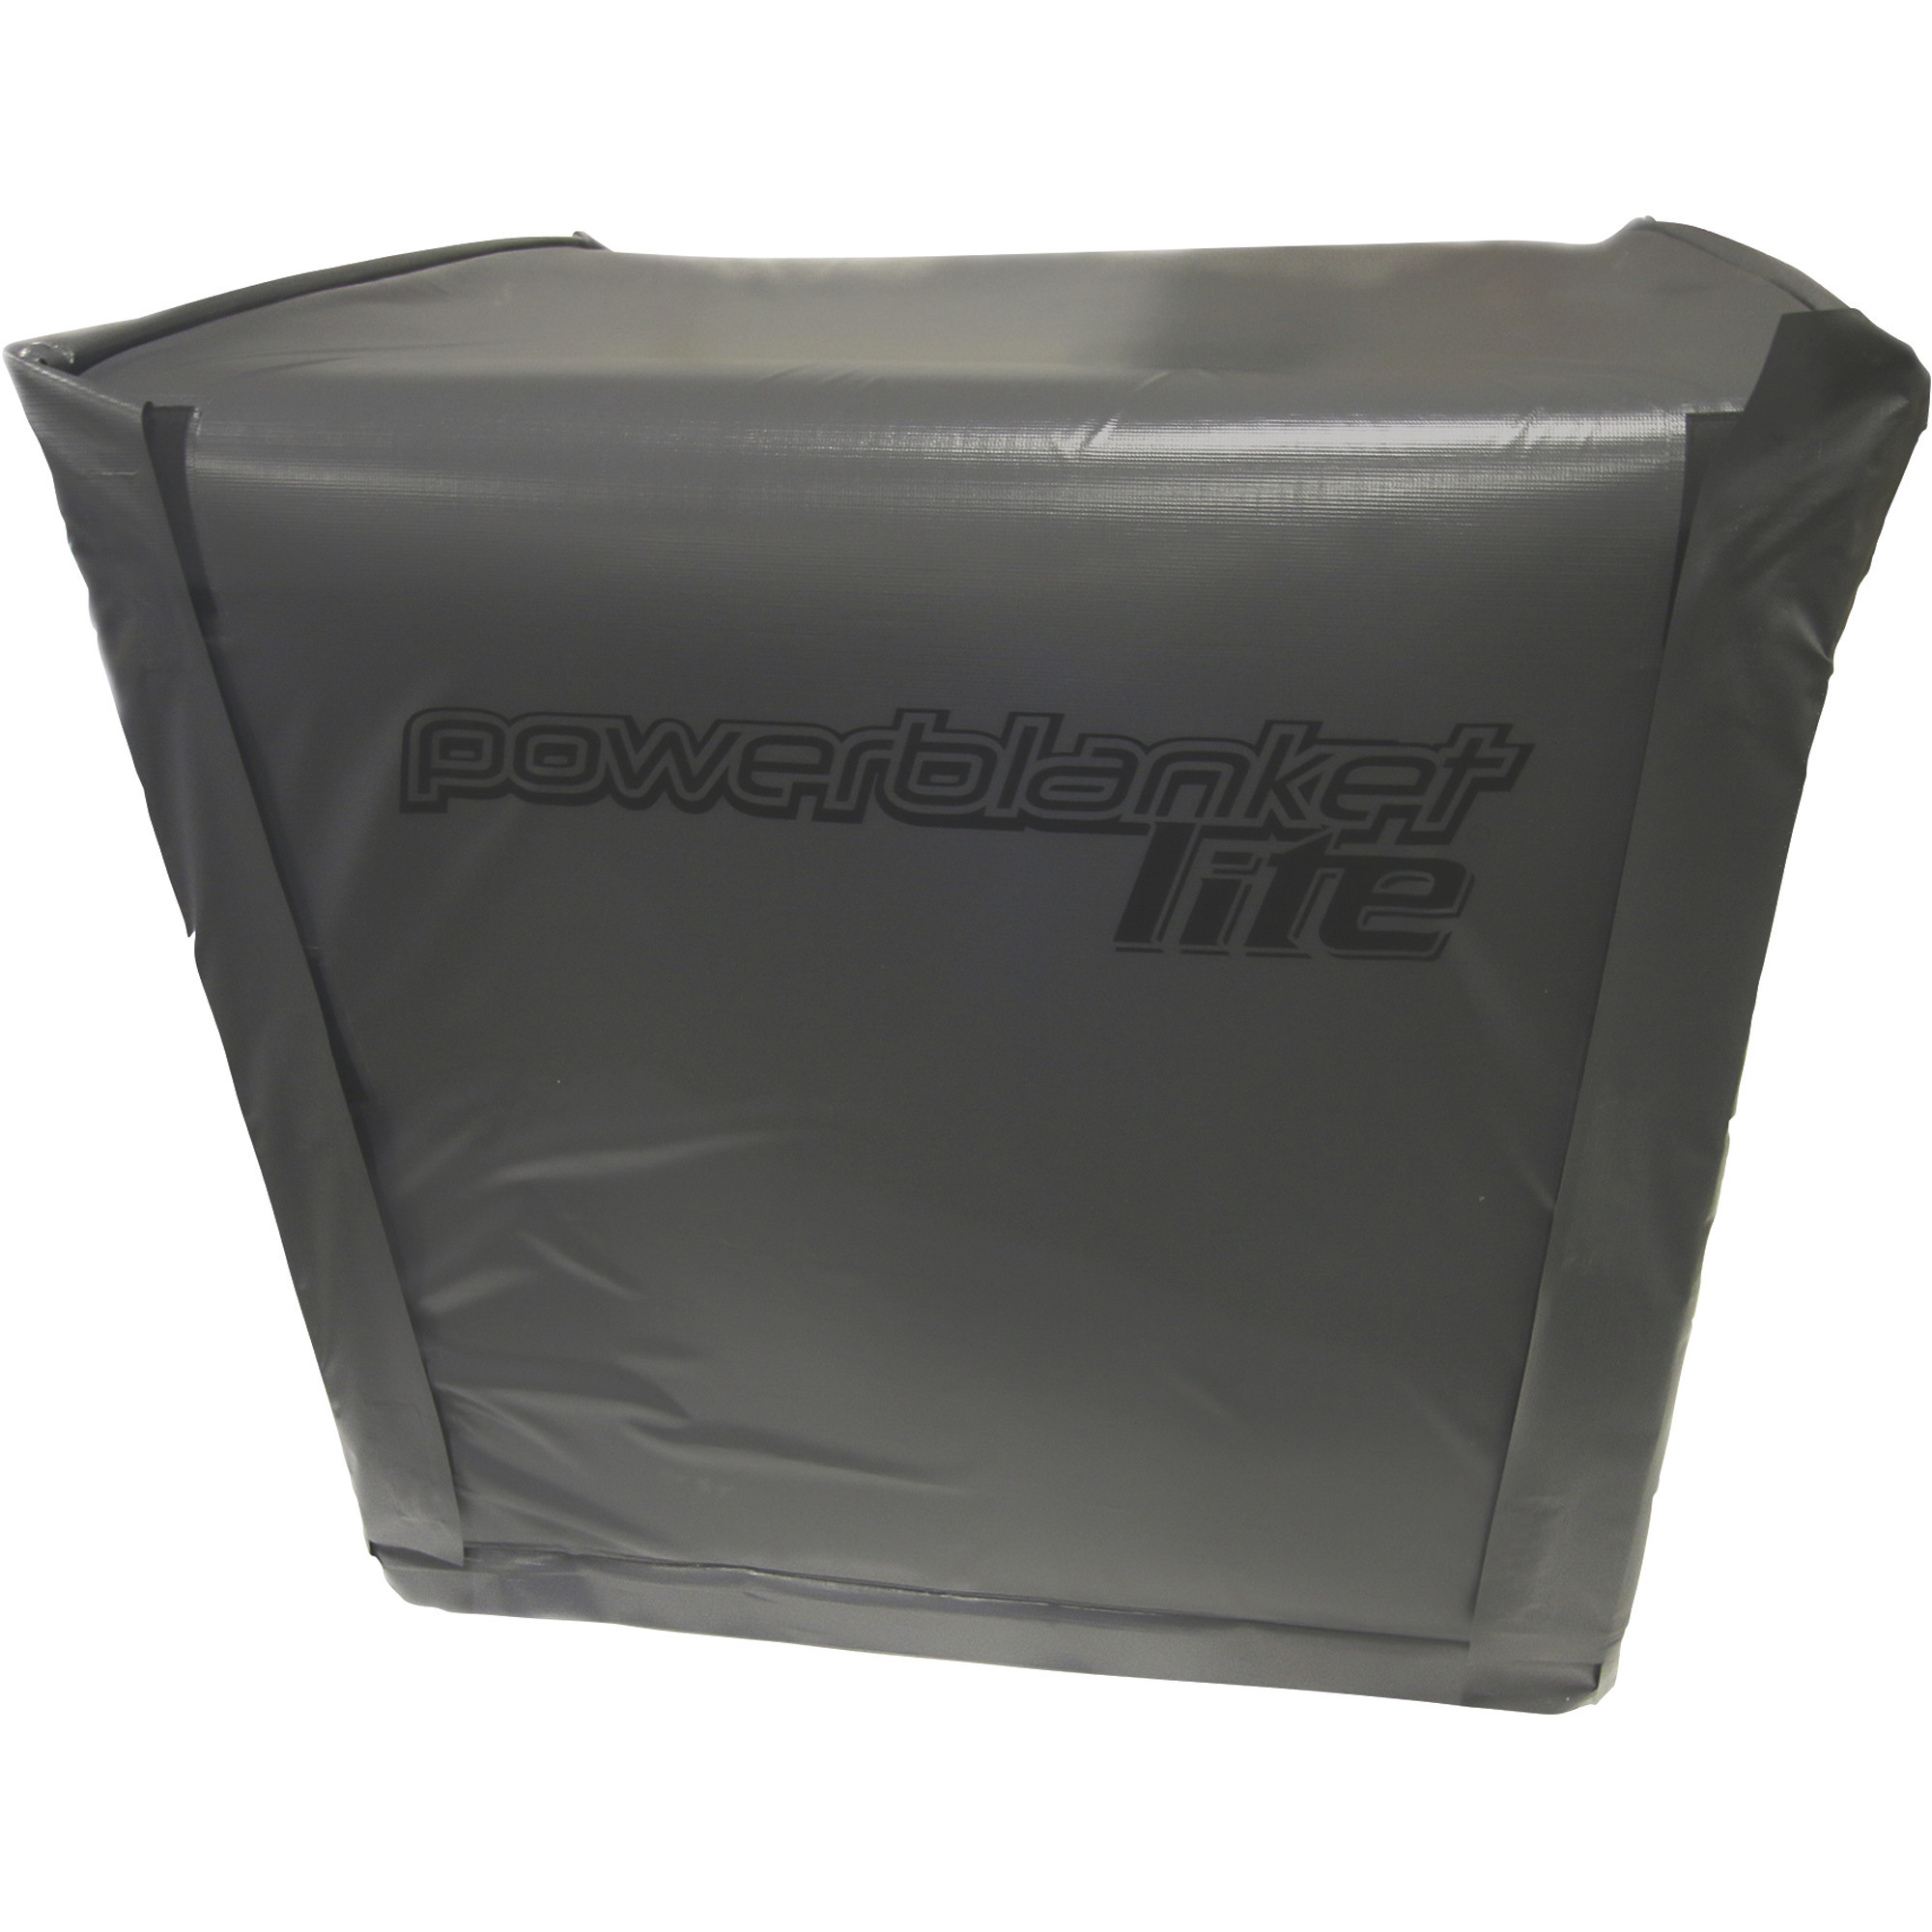 Powerblanket Lite Hot Box Bulk Material Warmer, 48 Cu. Ft. Capacity, 800 Watts, Model PBLHB48-800